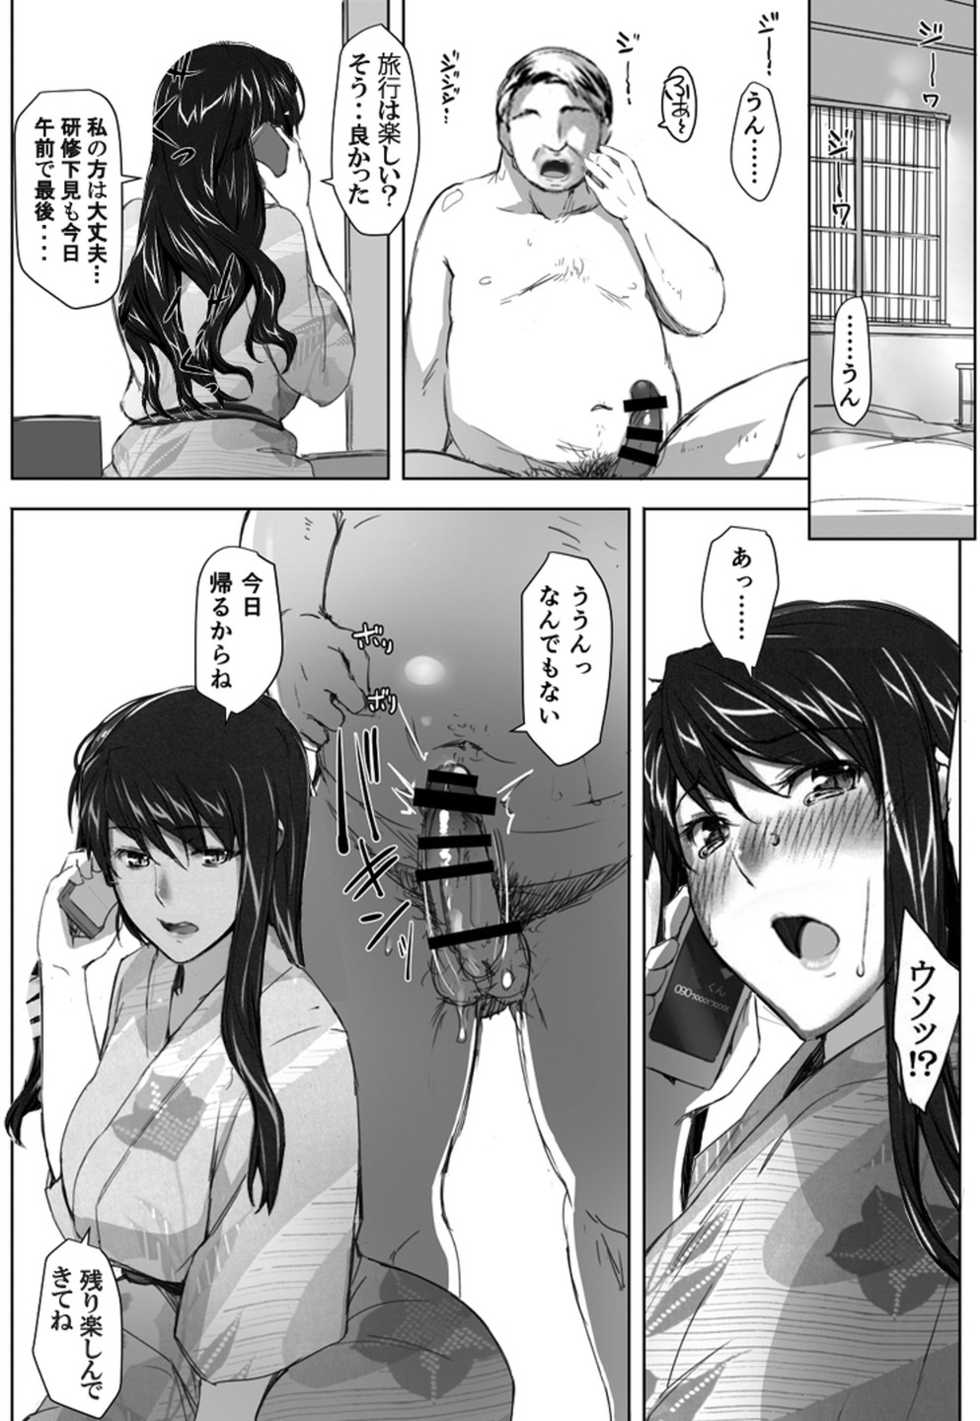 Sakiko-san in delusion Vol.1 Ver.1.1 ~Sakiko-san's circumstance at an educational training~ Stupid Sakiko (collage) on-going - Page 24